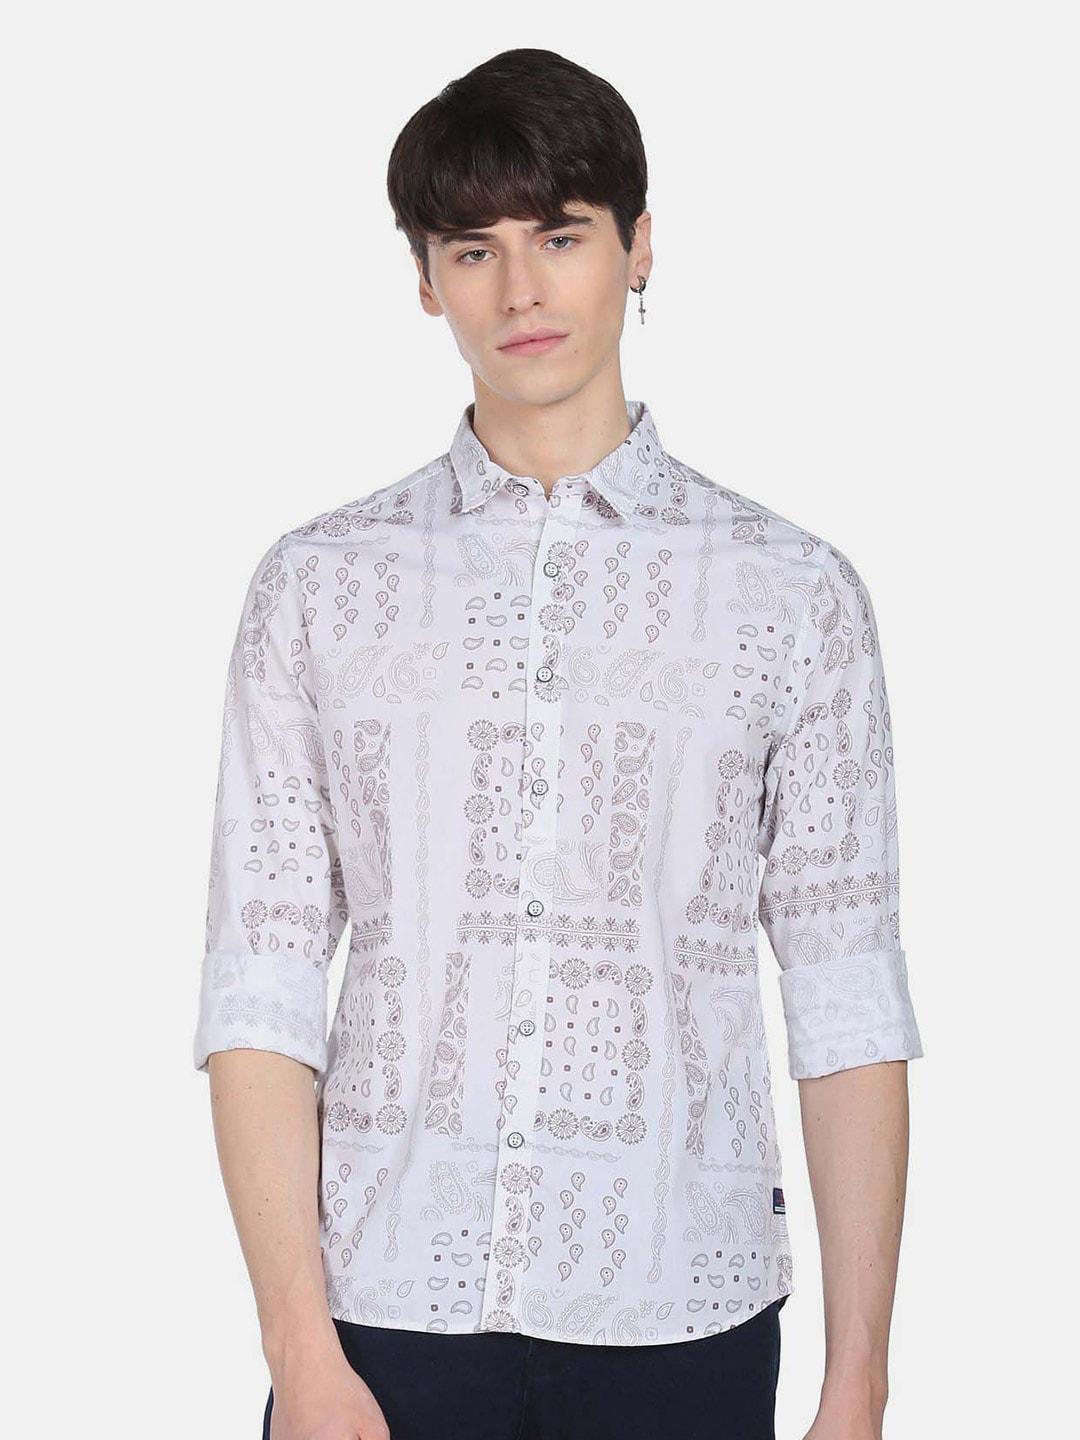 flying-machine-ethnic-motif-printed-cotton-casual-shirt